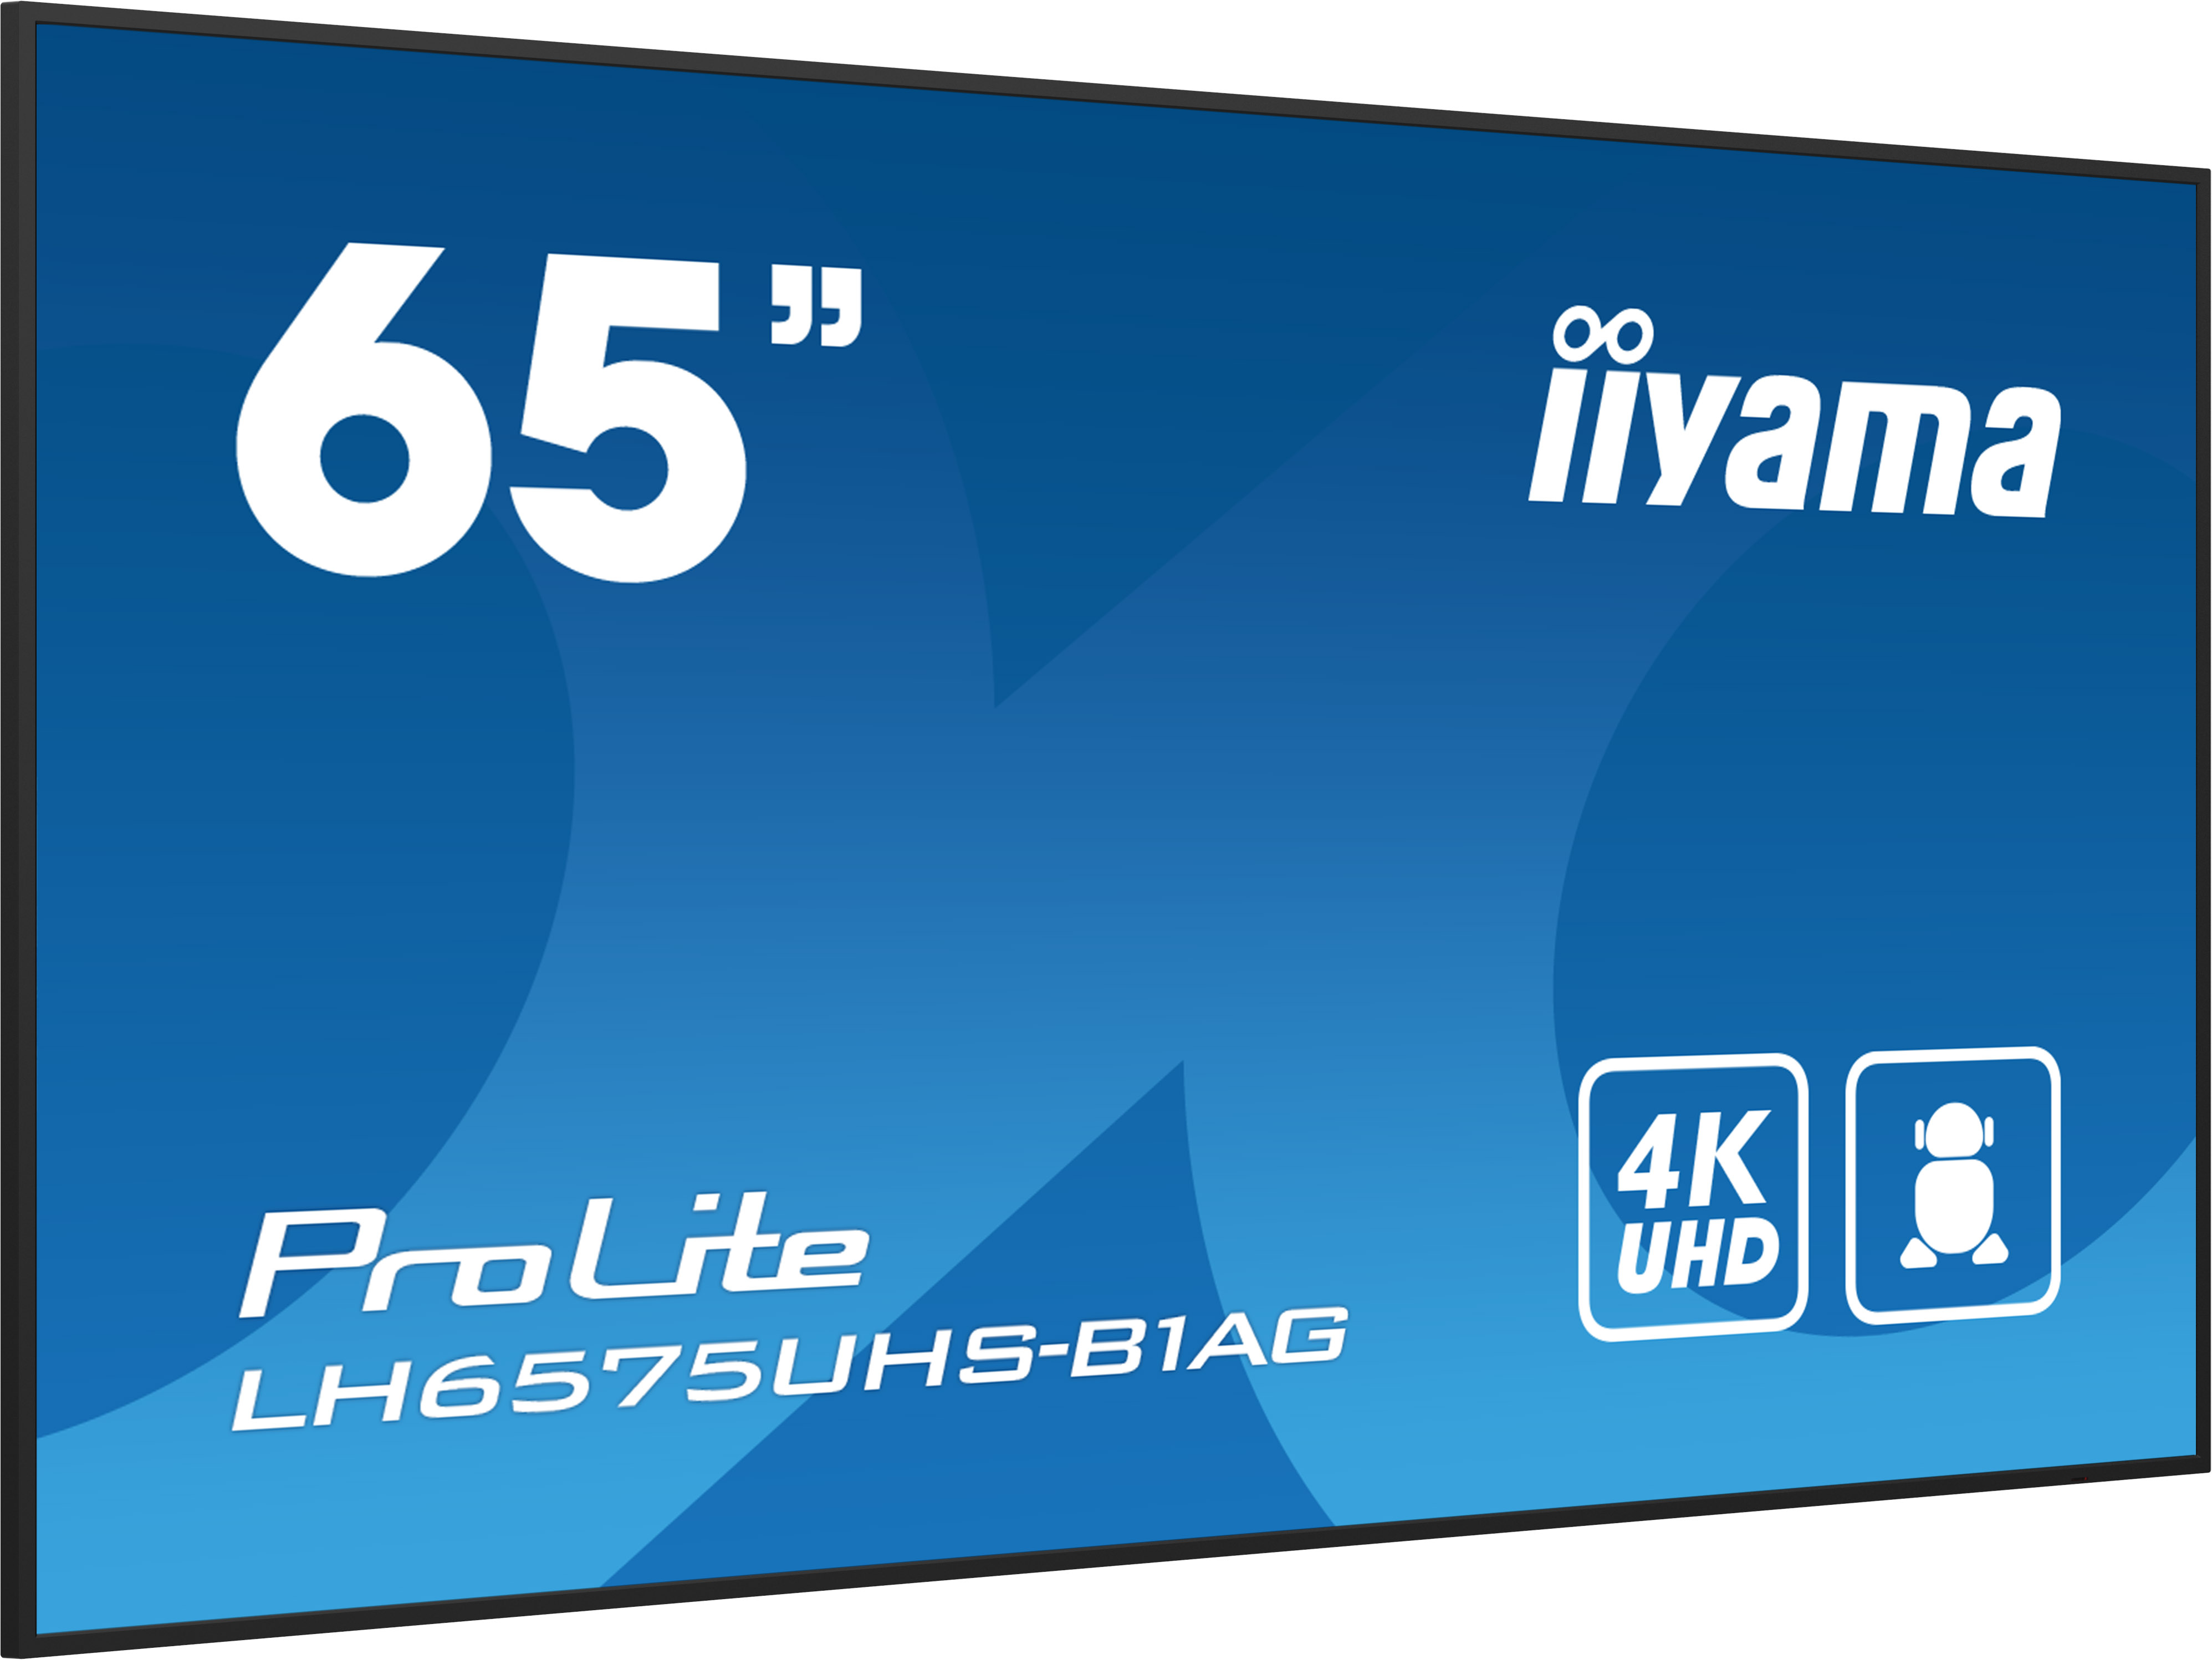 Iiyama ProLite LH6575UHS | 65"